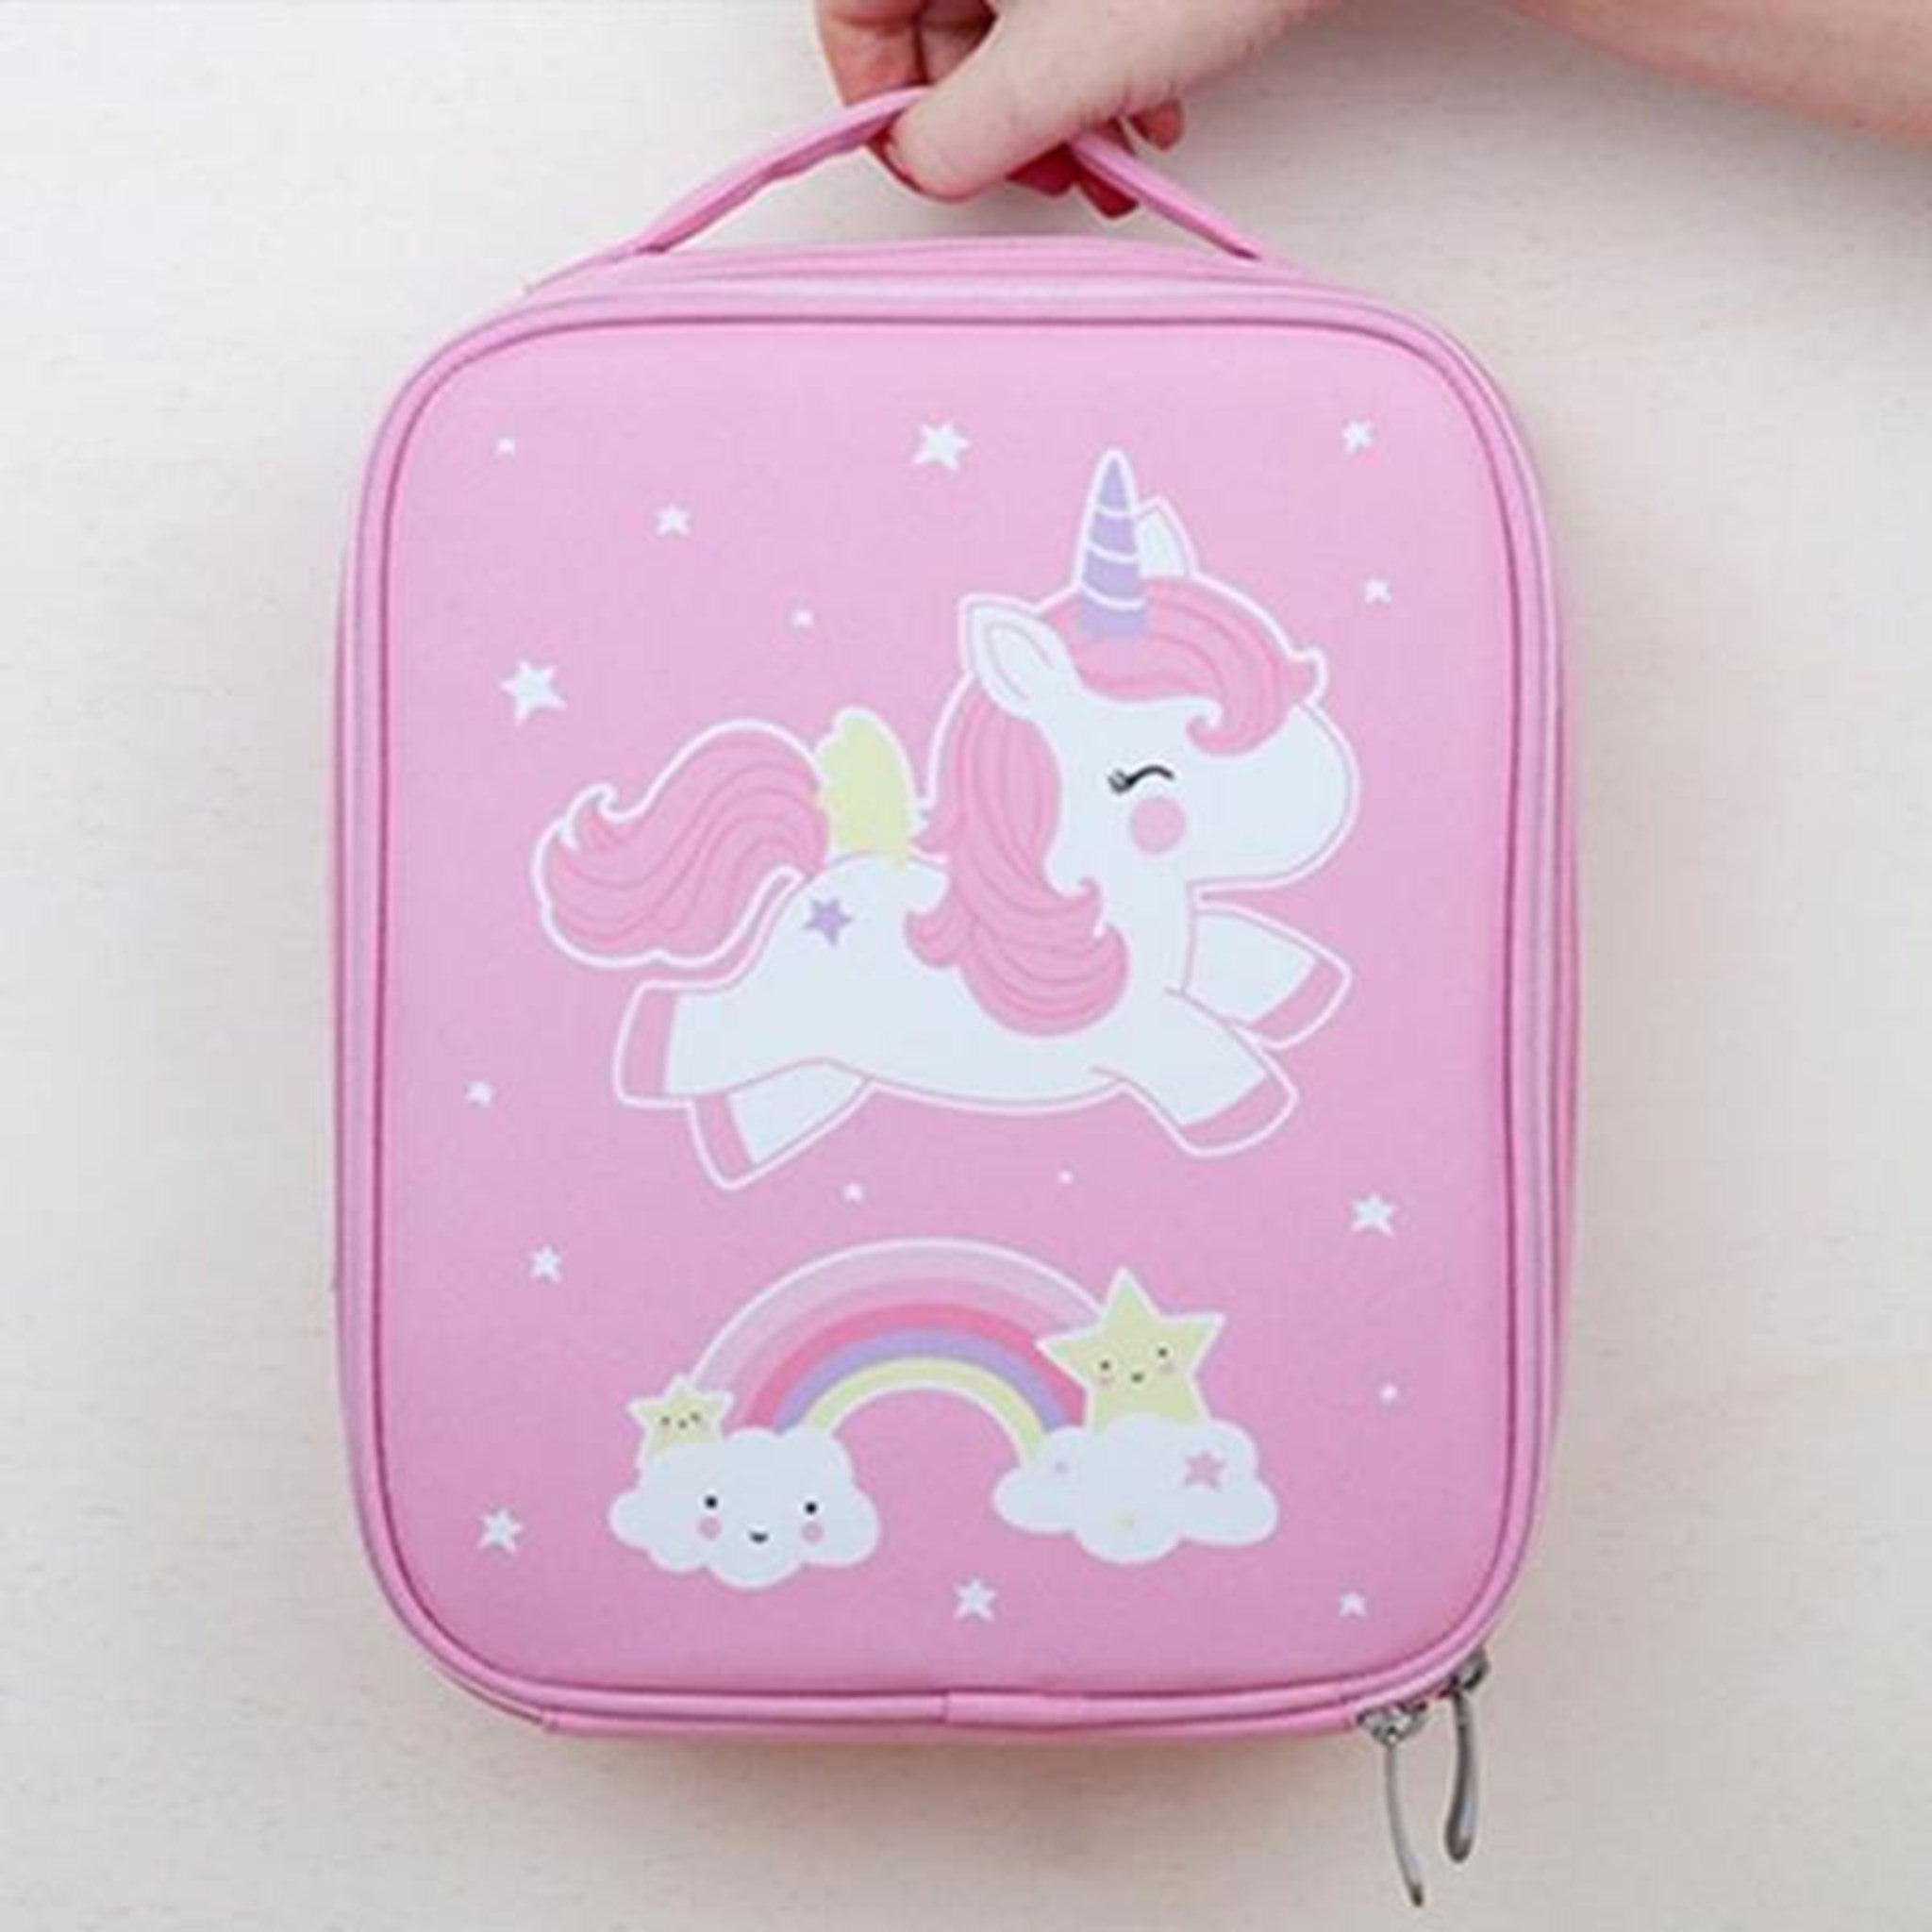 A Little Lovely Company Cool Bag Unicorn 4